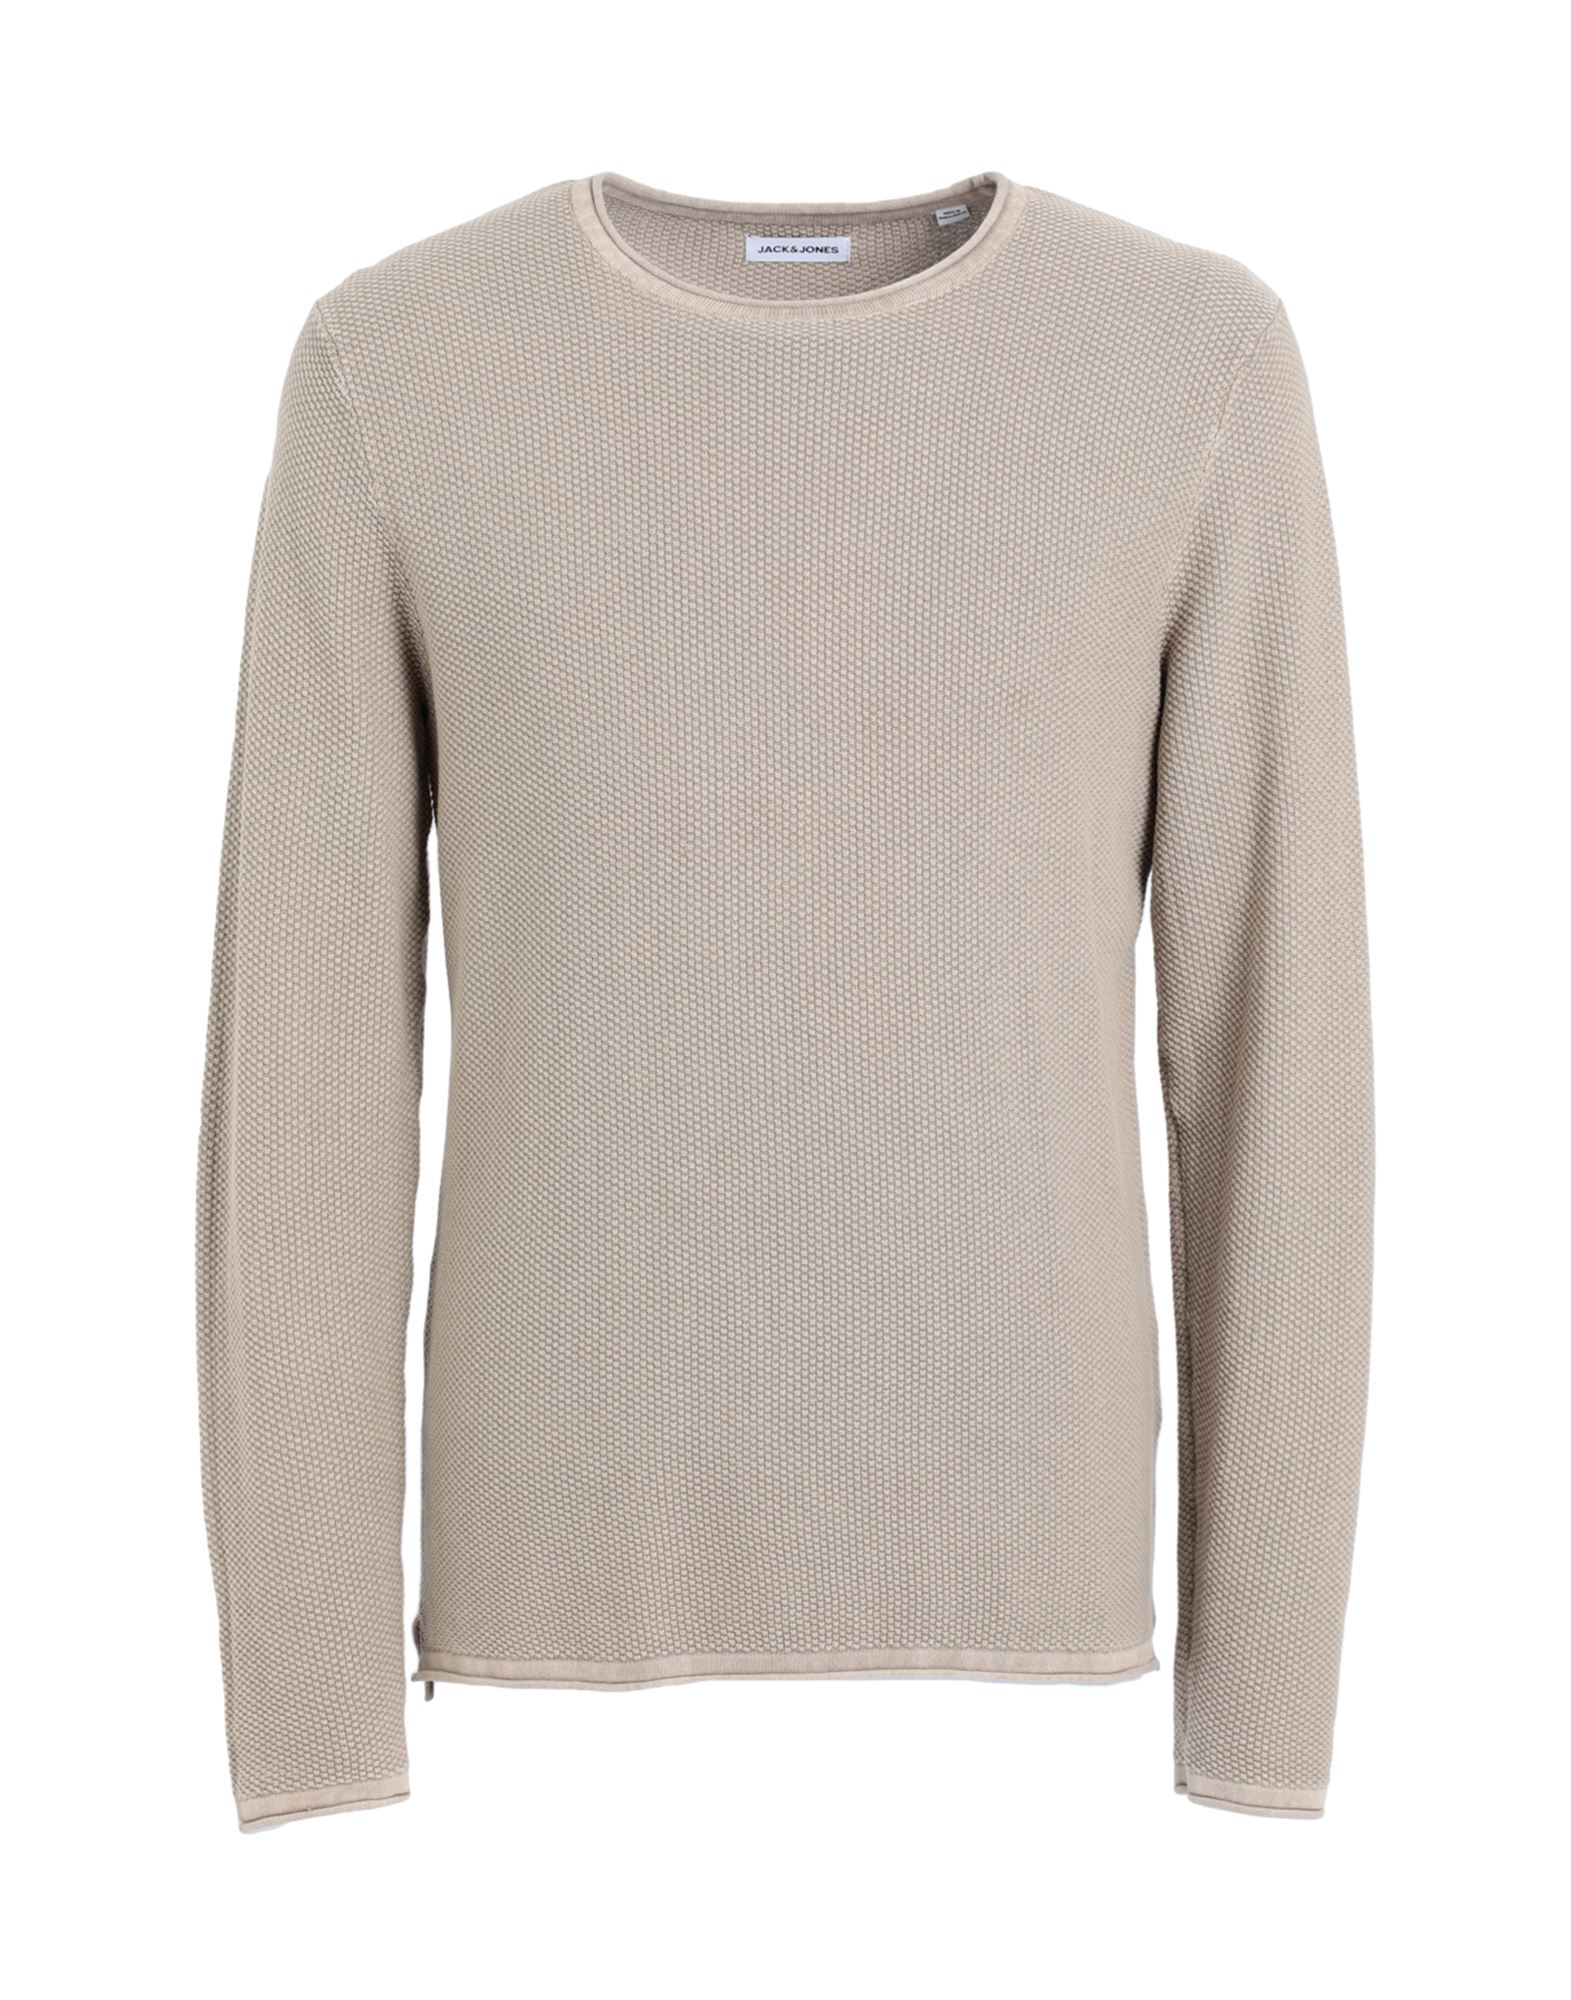 Jack & Jones Man Sweater Light Brown Size Xl Cotton In Beige